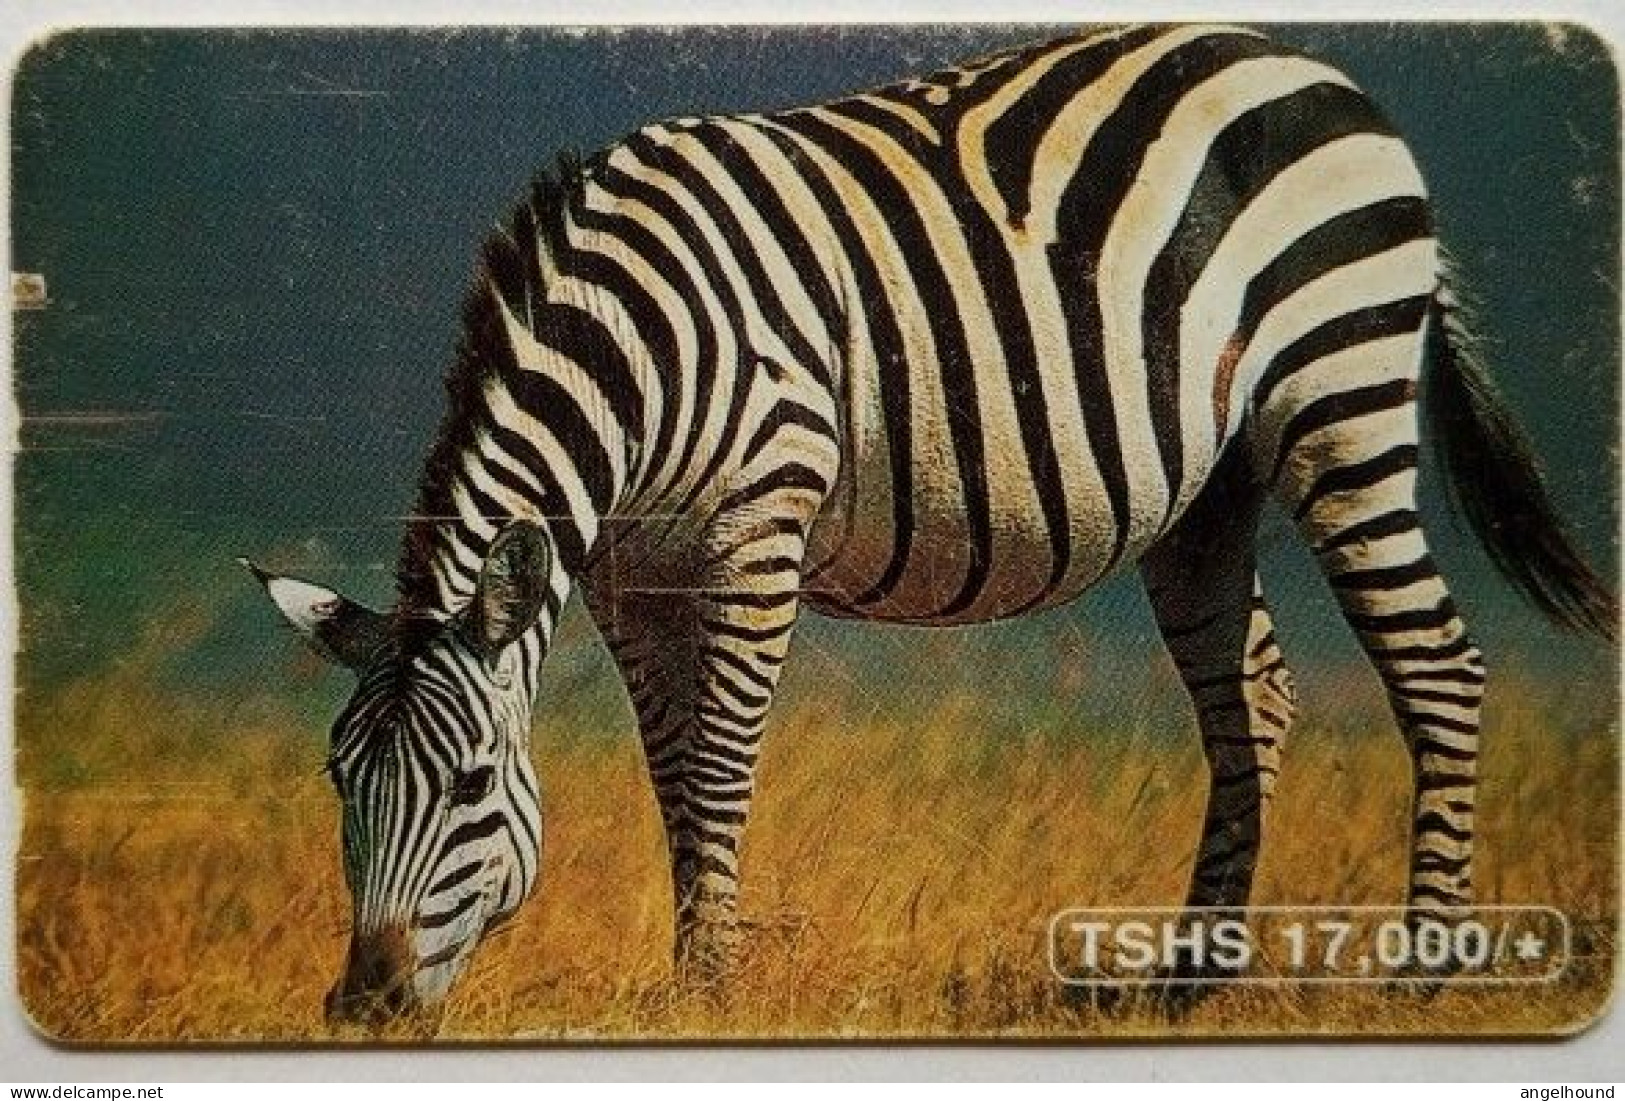 Tanzania 17,000 Shillings " Zebra " - Tanzanie